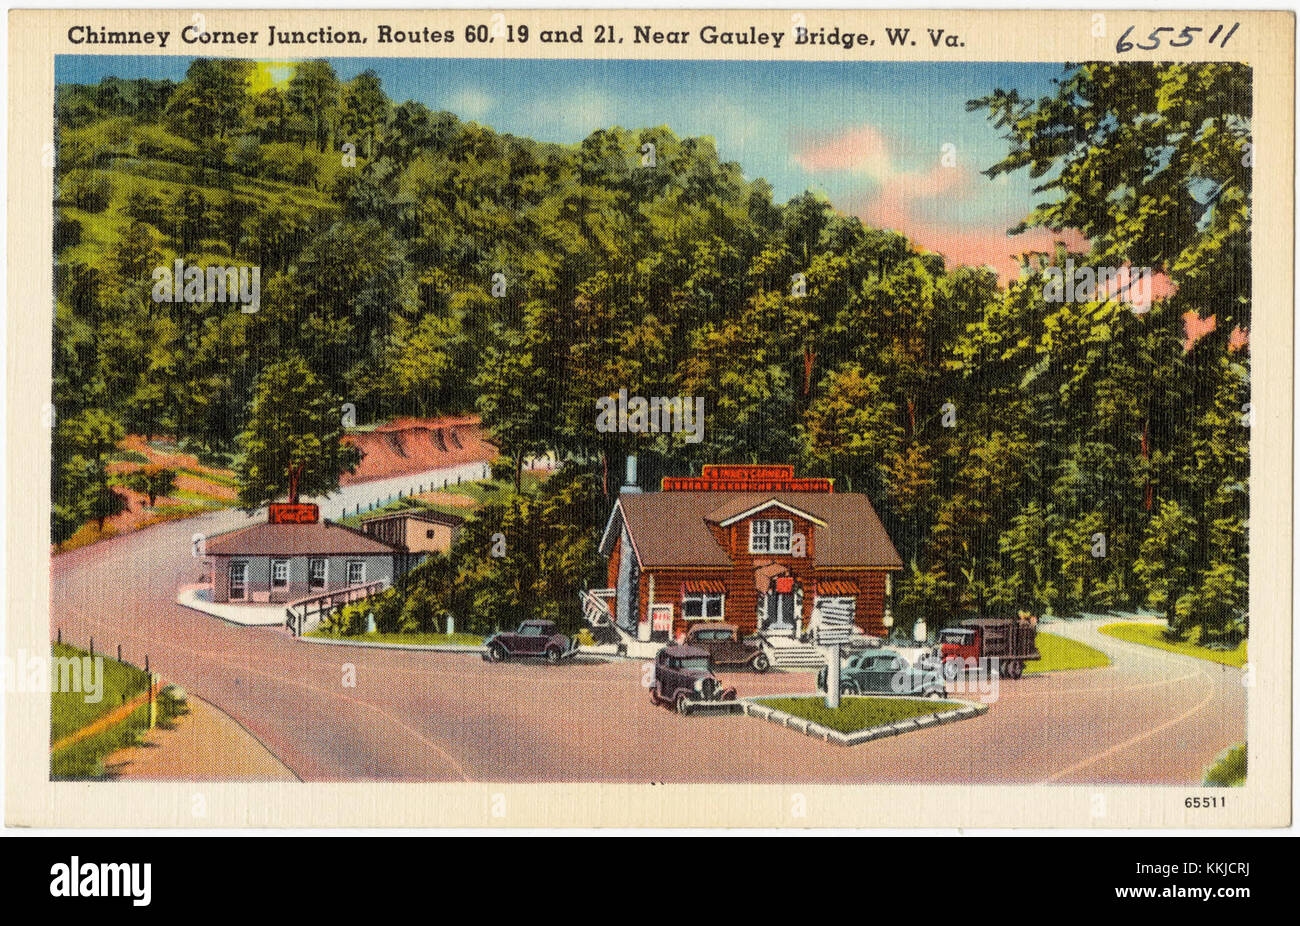 Chimney Corner Junction, routes 60, 19 and 21, near Gauley Bridge, W. Va (65511) Stock Photo